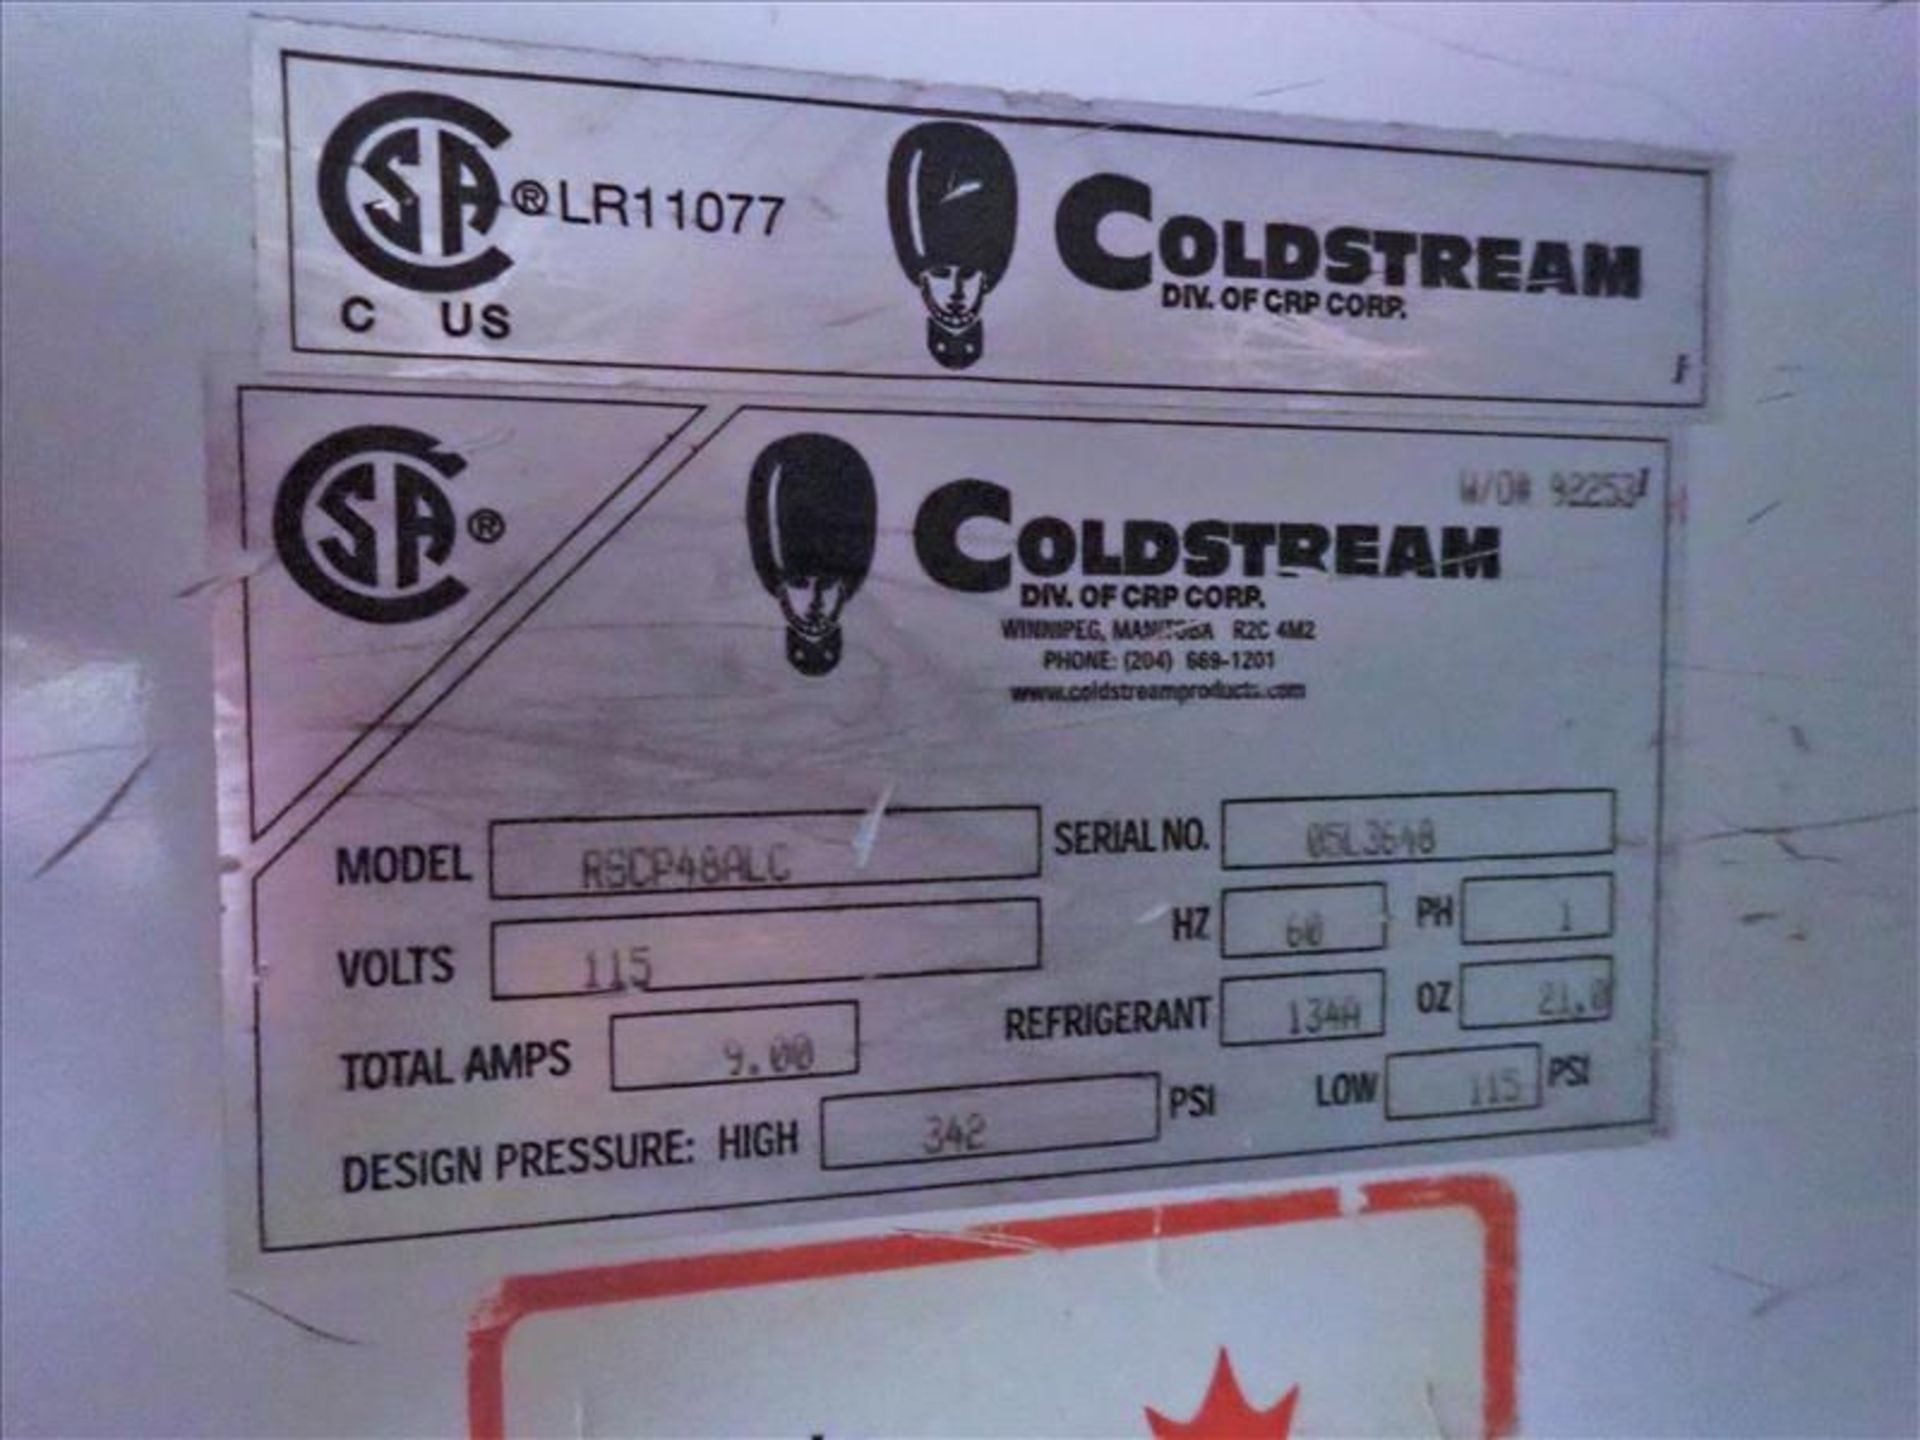 ColdStream Refridgerator, mod. R6CP48ALC, 48 in. (Tag No. 4441) [Sea Container 971037-8] {Location - Image 2 of 2